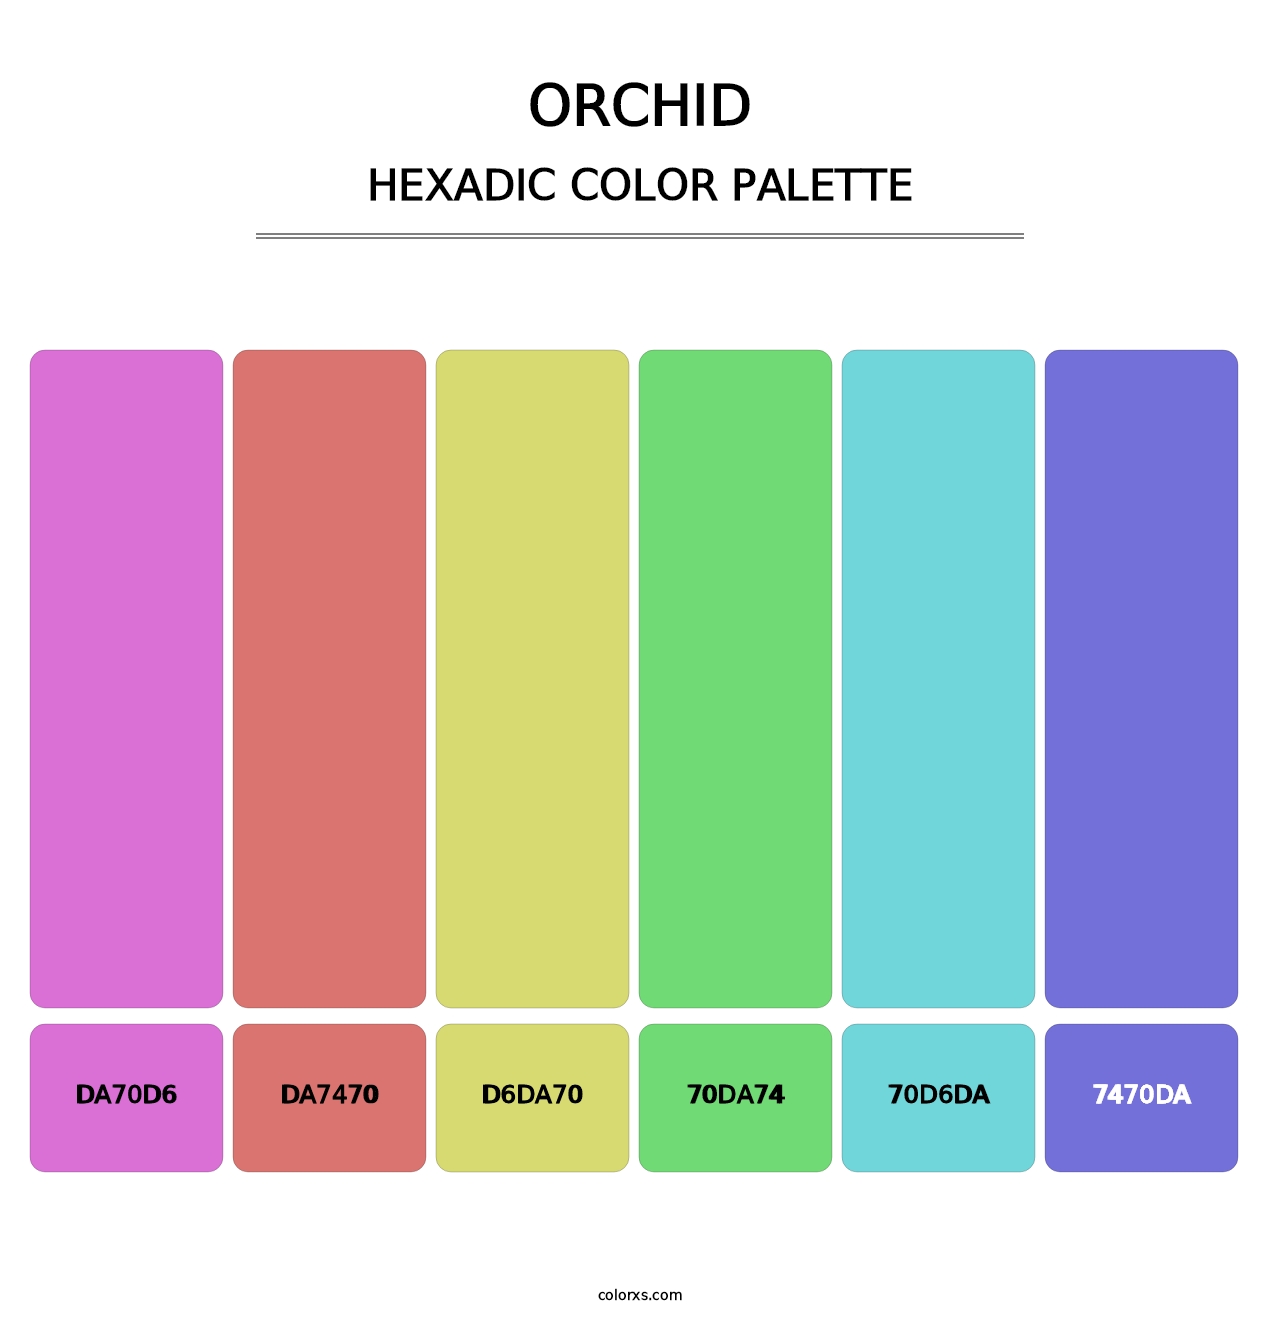 Orchid - Hexadic Color Palette